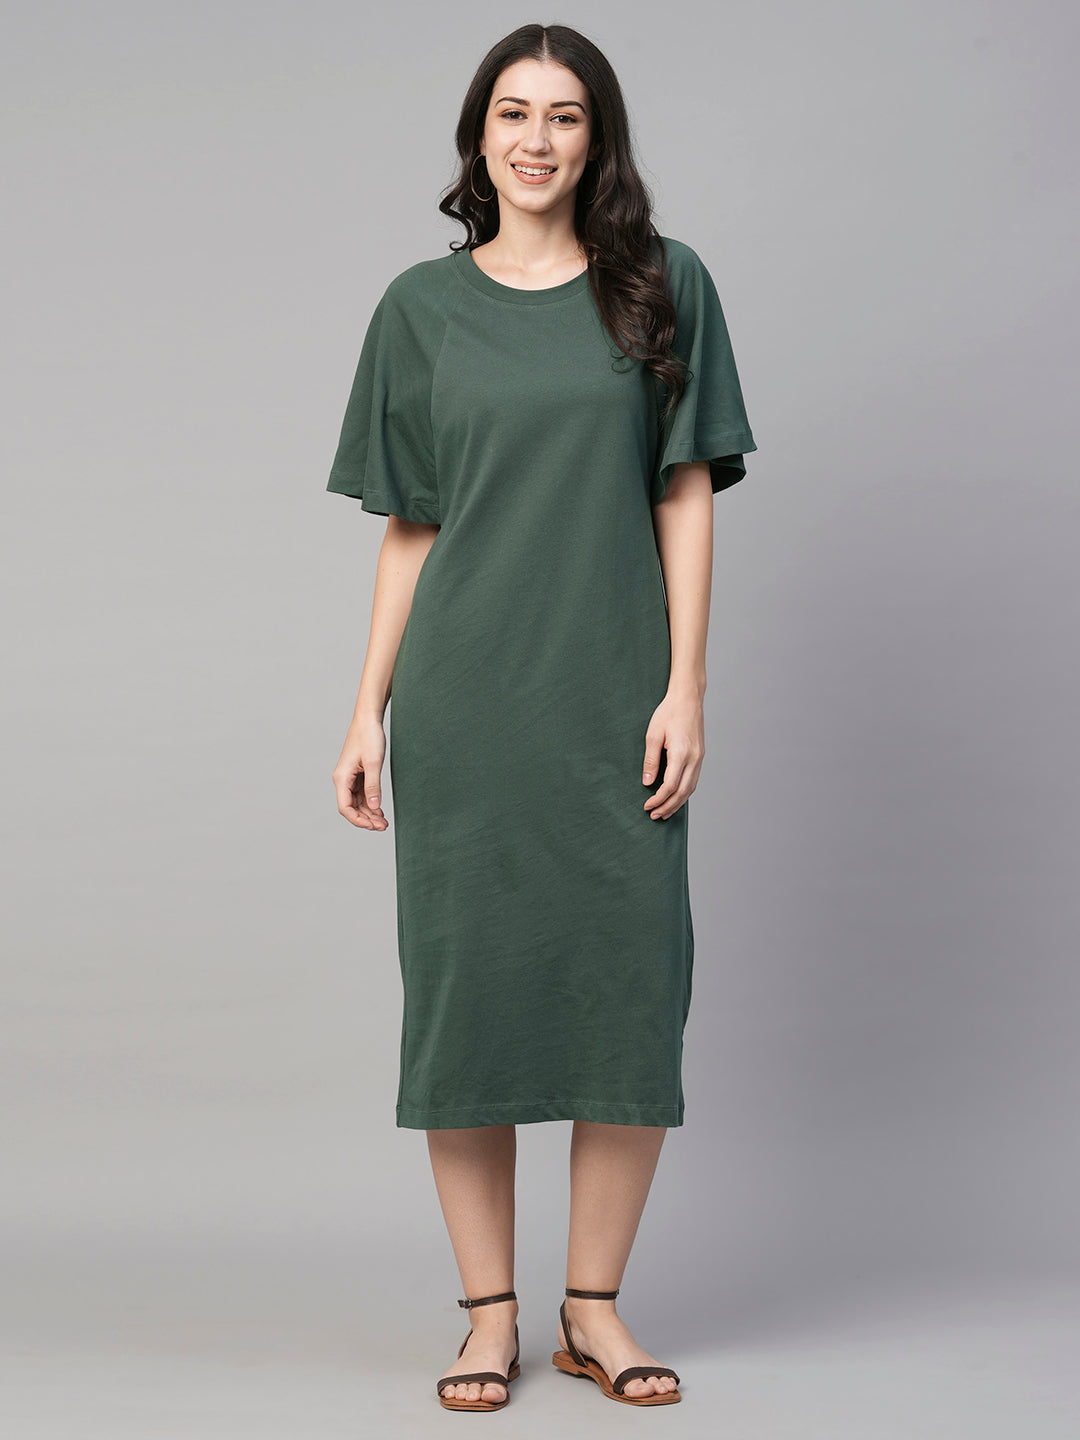 Women's Green Cotton Loose Fit Knit Dress